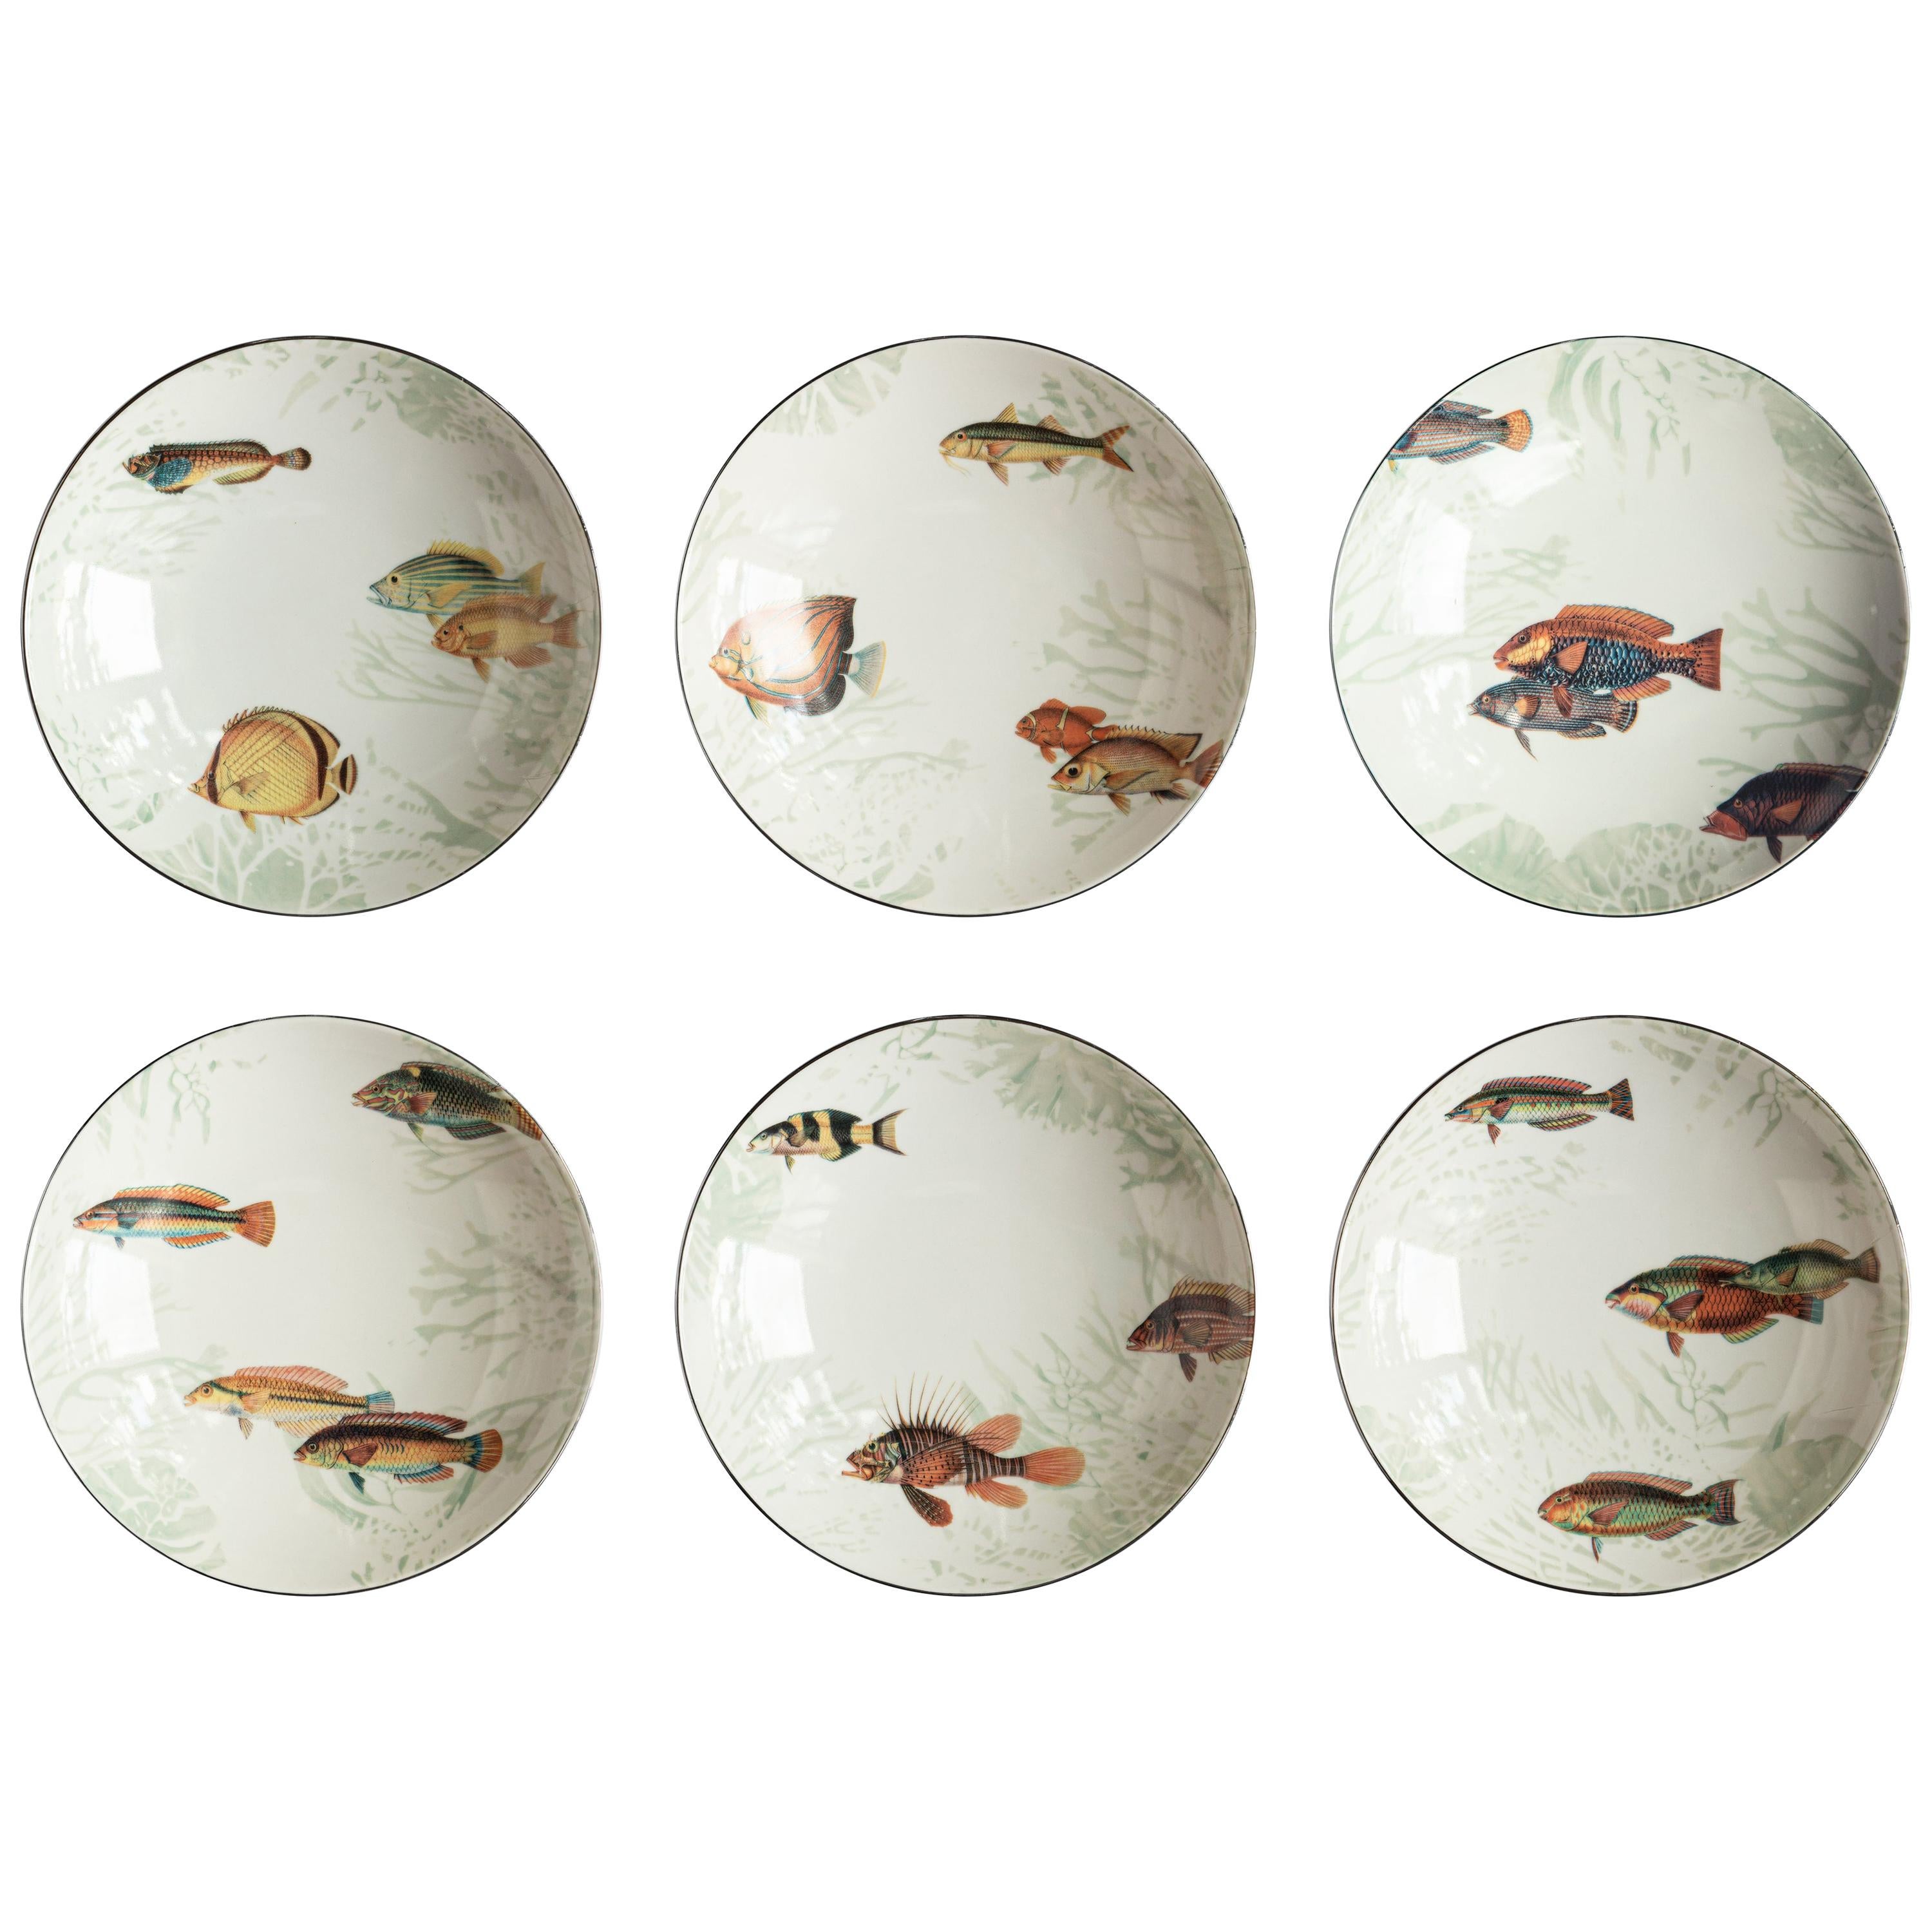 Amami, Six Contemporary Porcelain Soup Plates with Decorative Design